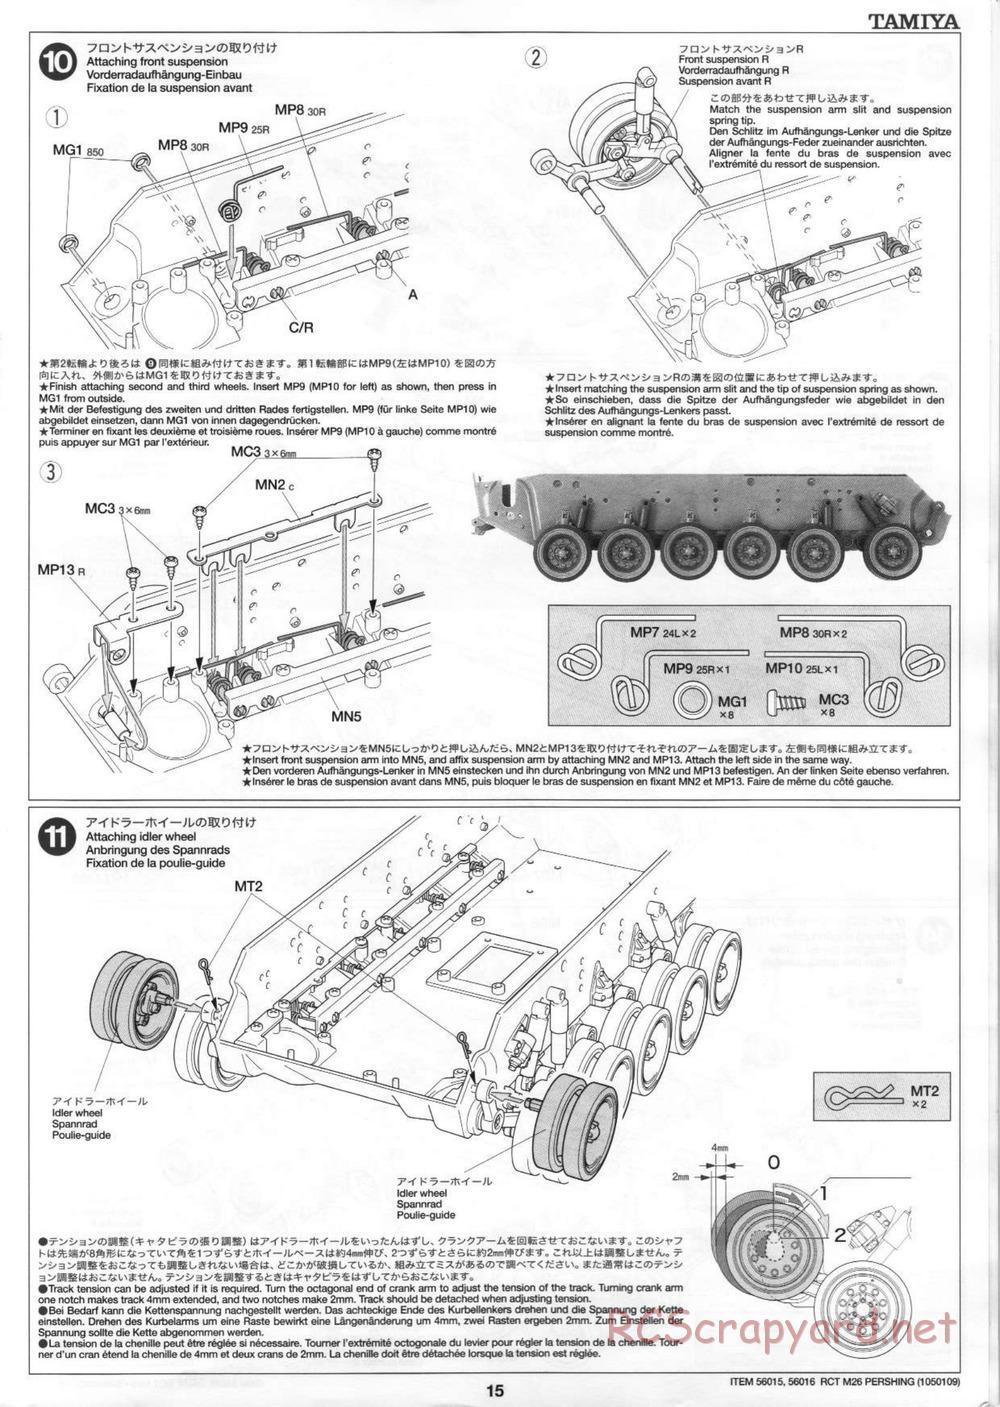 Tamiya - M26 Pershing - 1/16 Scale Chassis - Manual - Page 15